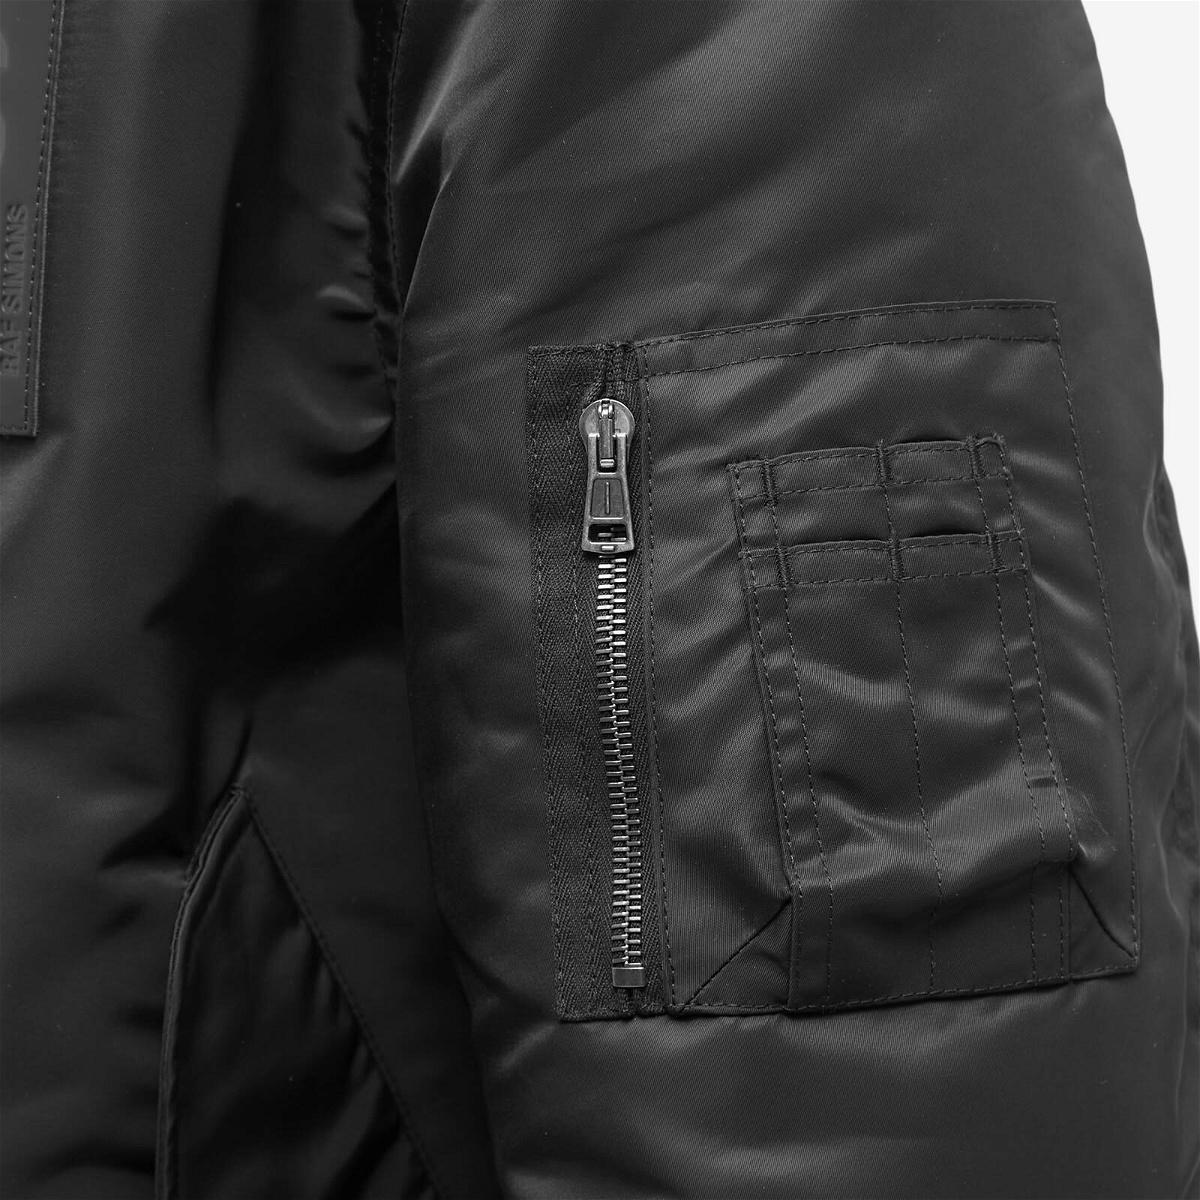 Raf Simons Men's Leather Patch Bomber Jacket in Black Raf Simons